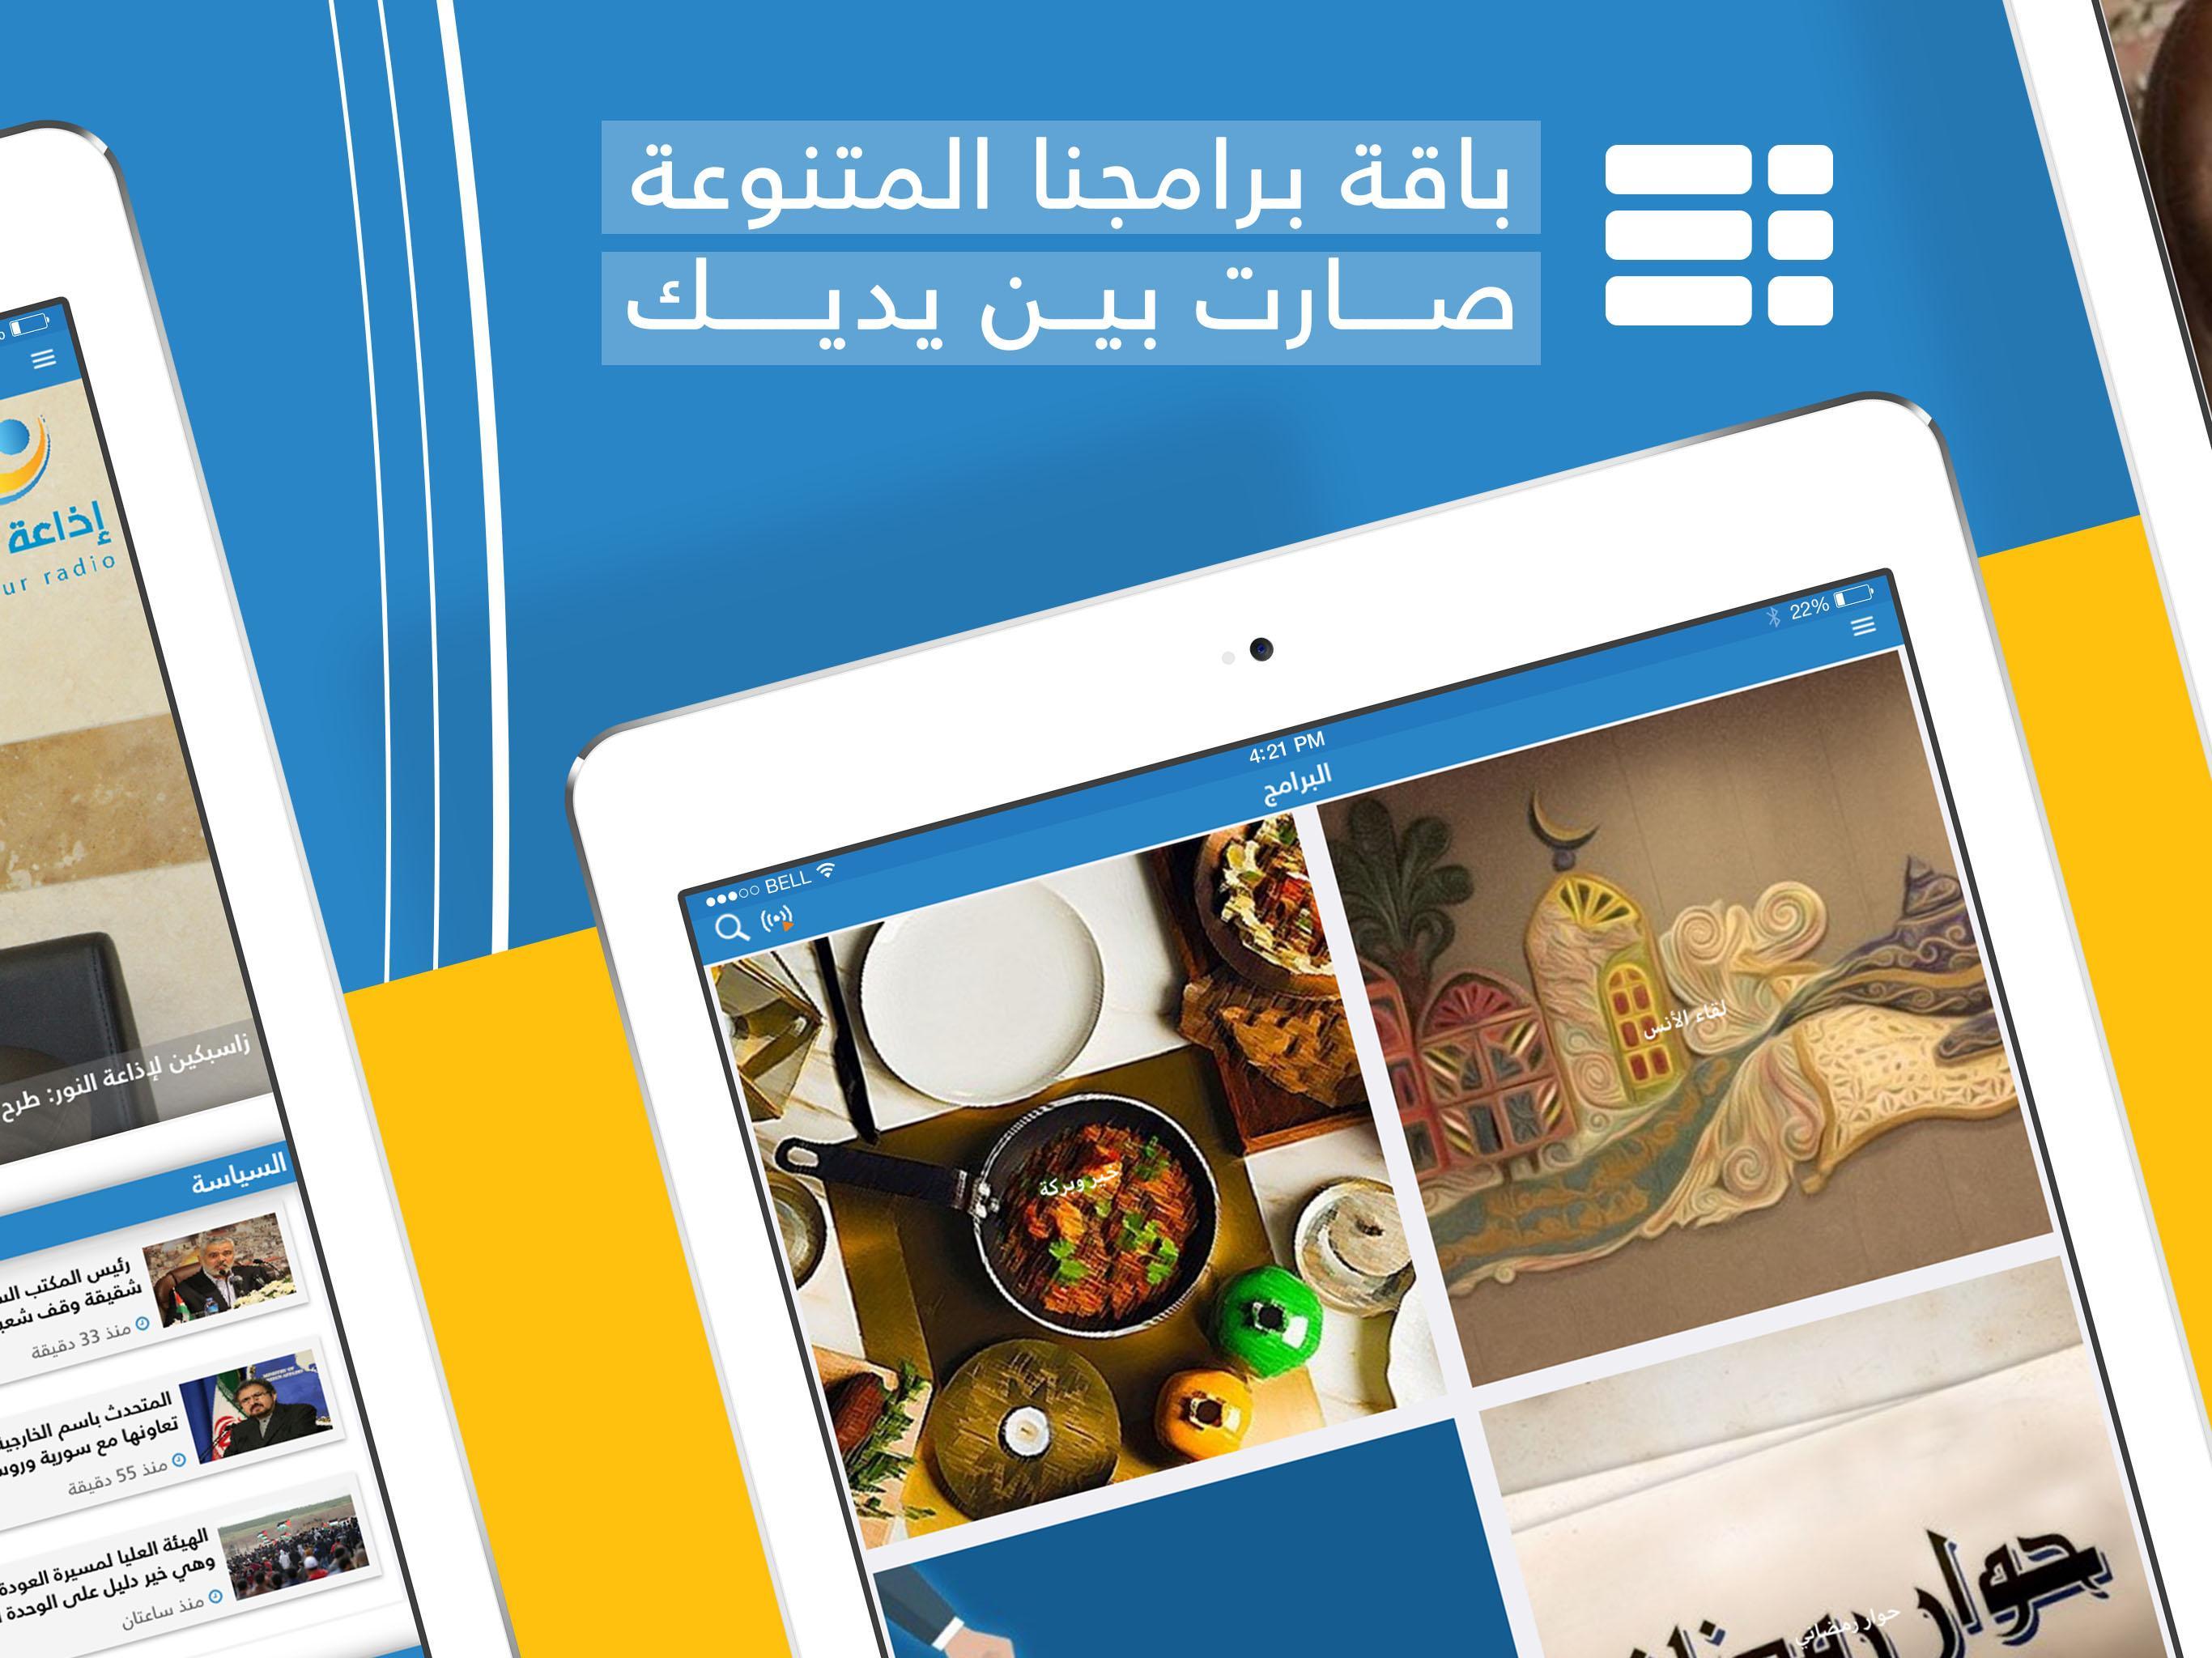 Al Nour Radio Station for Android - APK Download